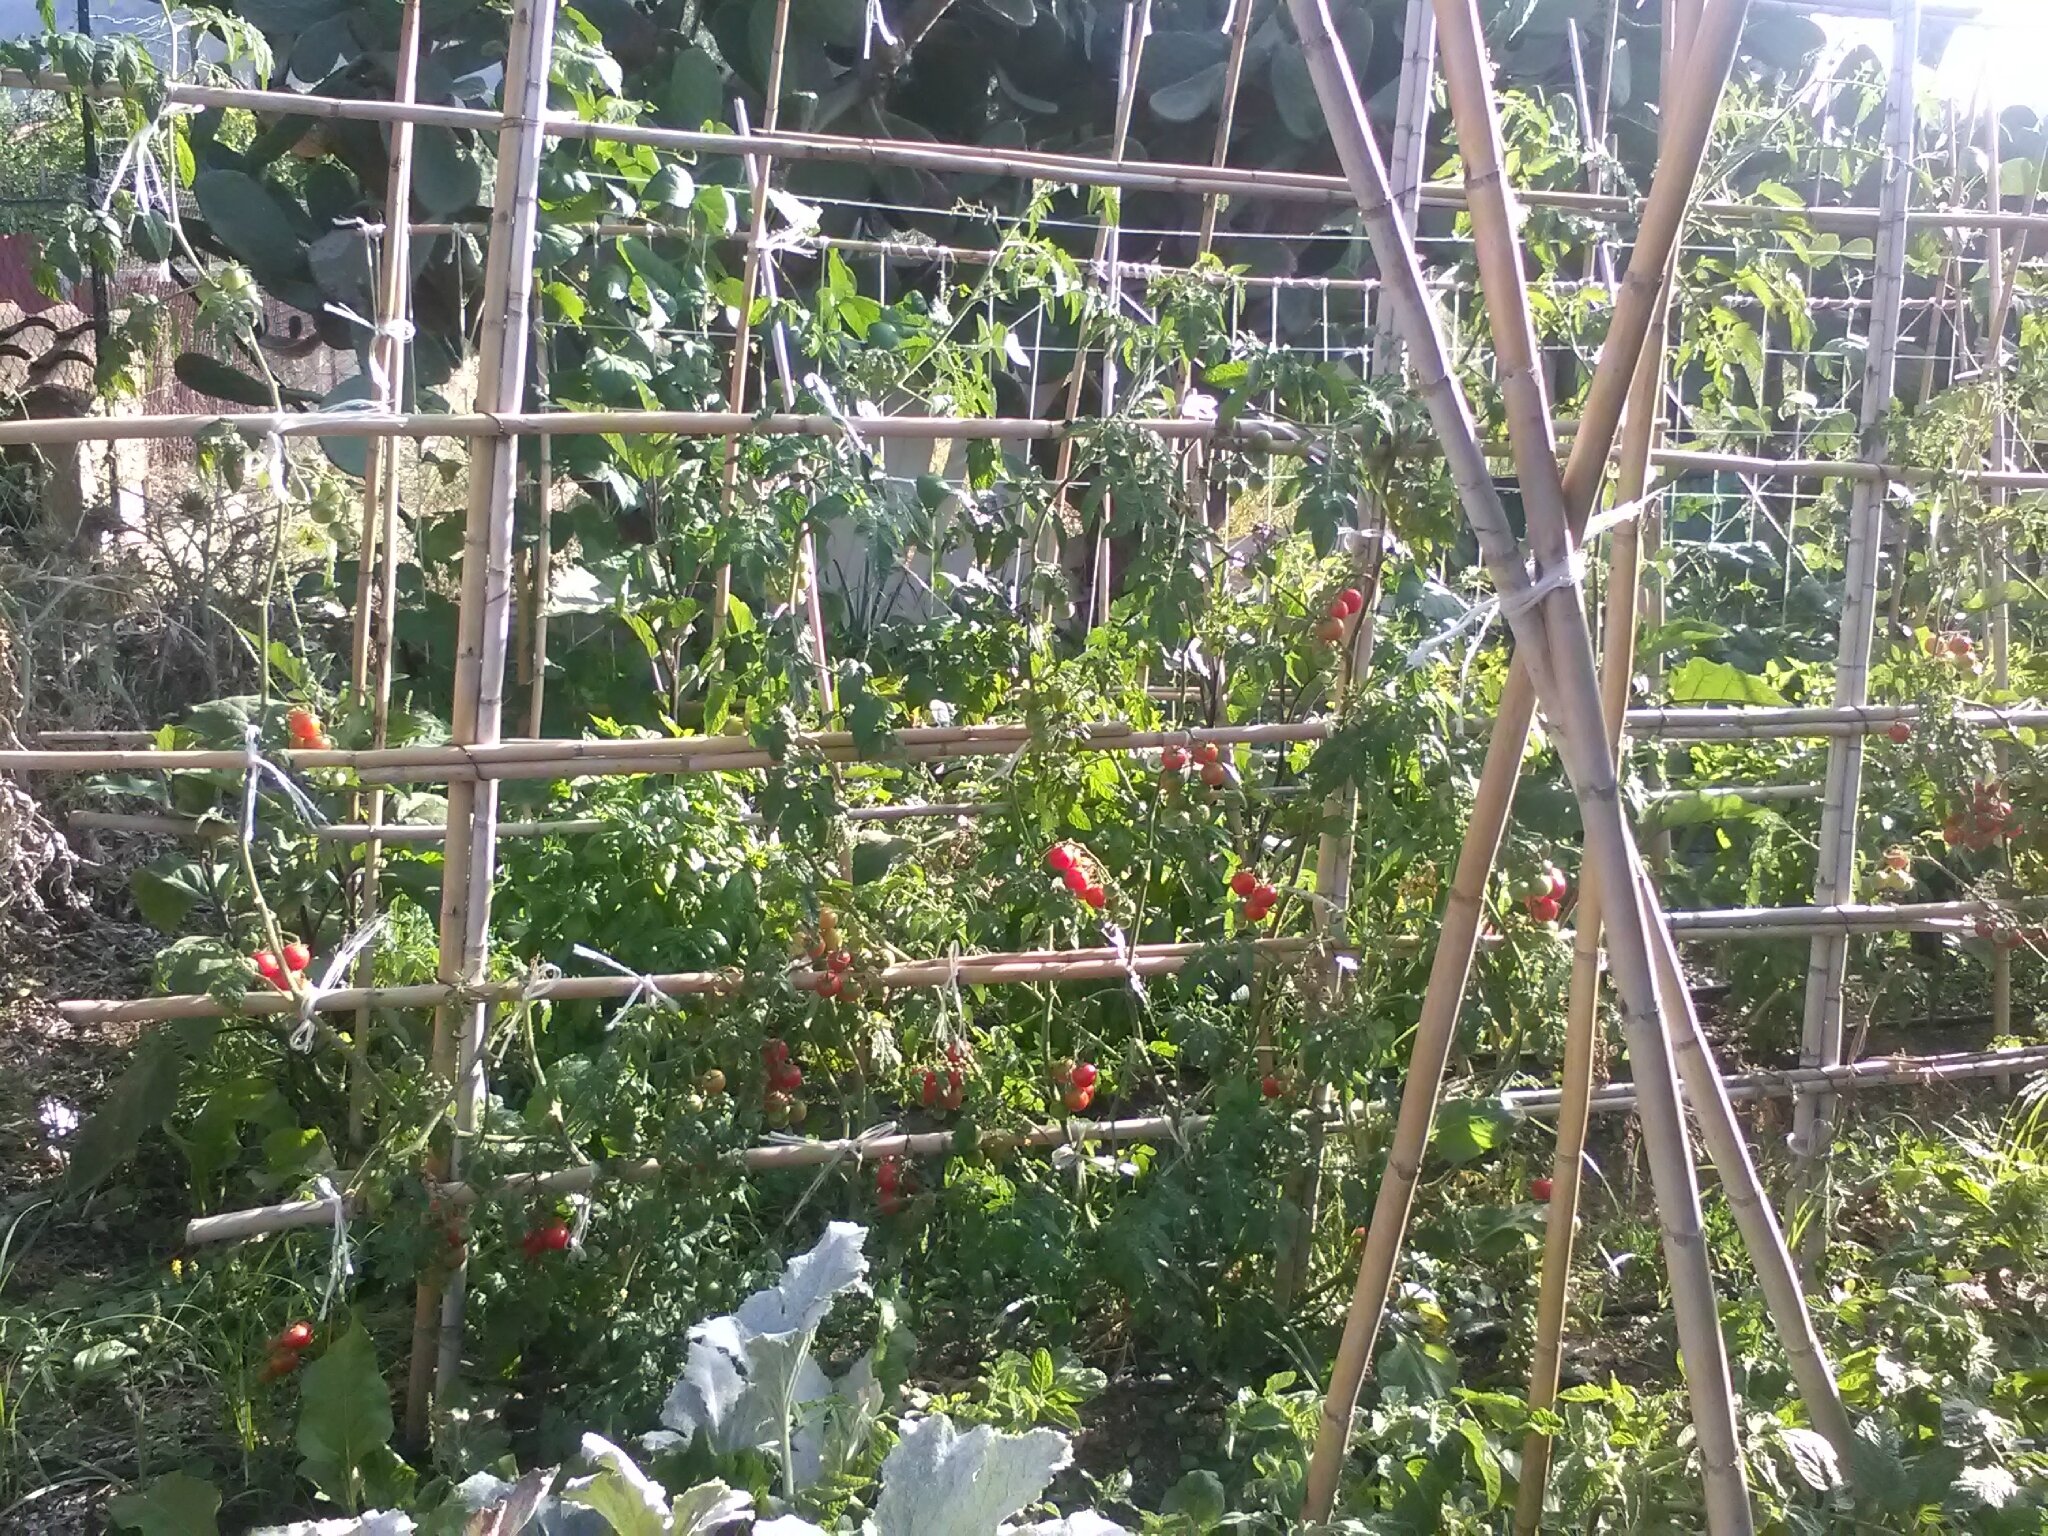 Plants de tomates cerises,haricots verts,aubergines,basilic